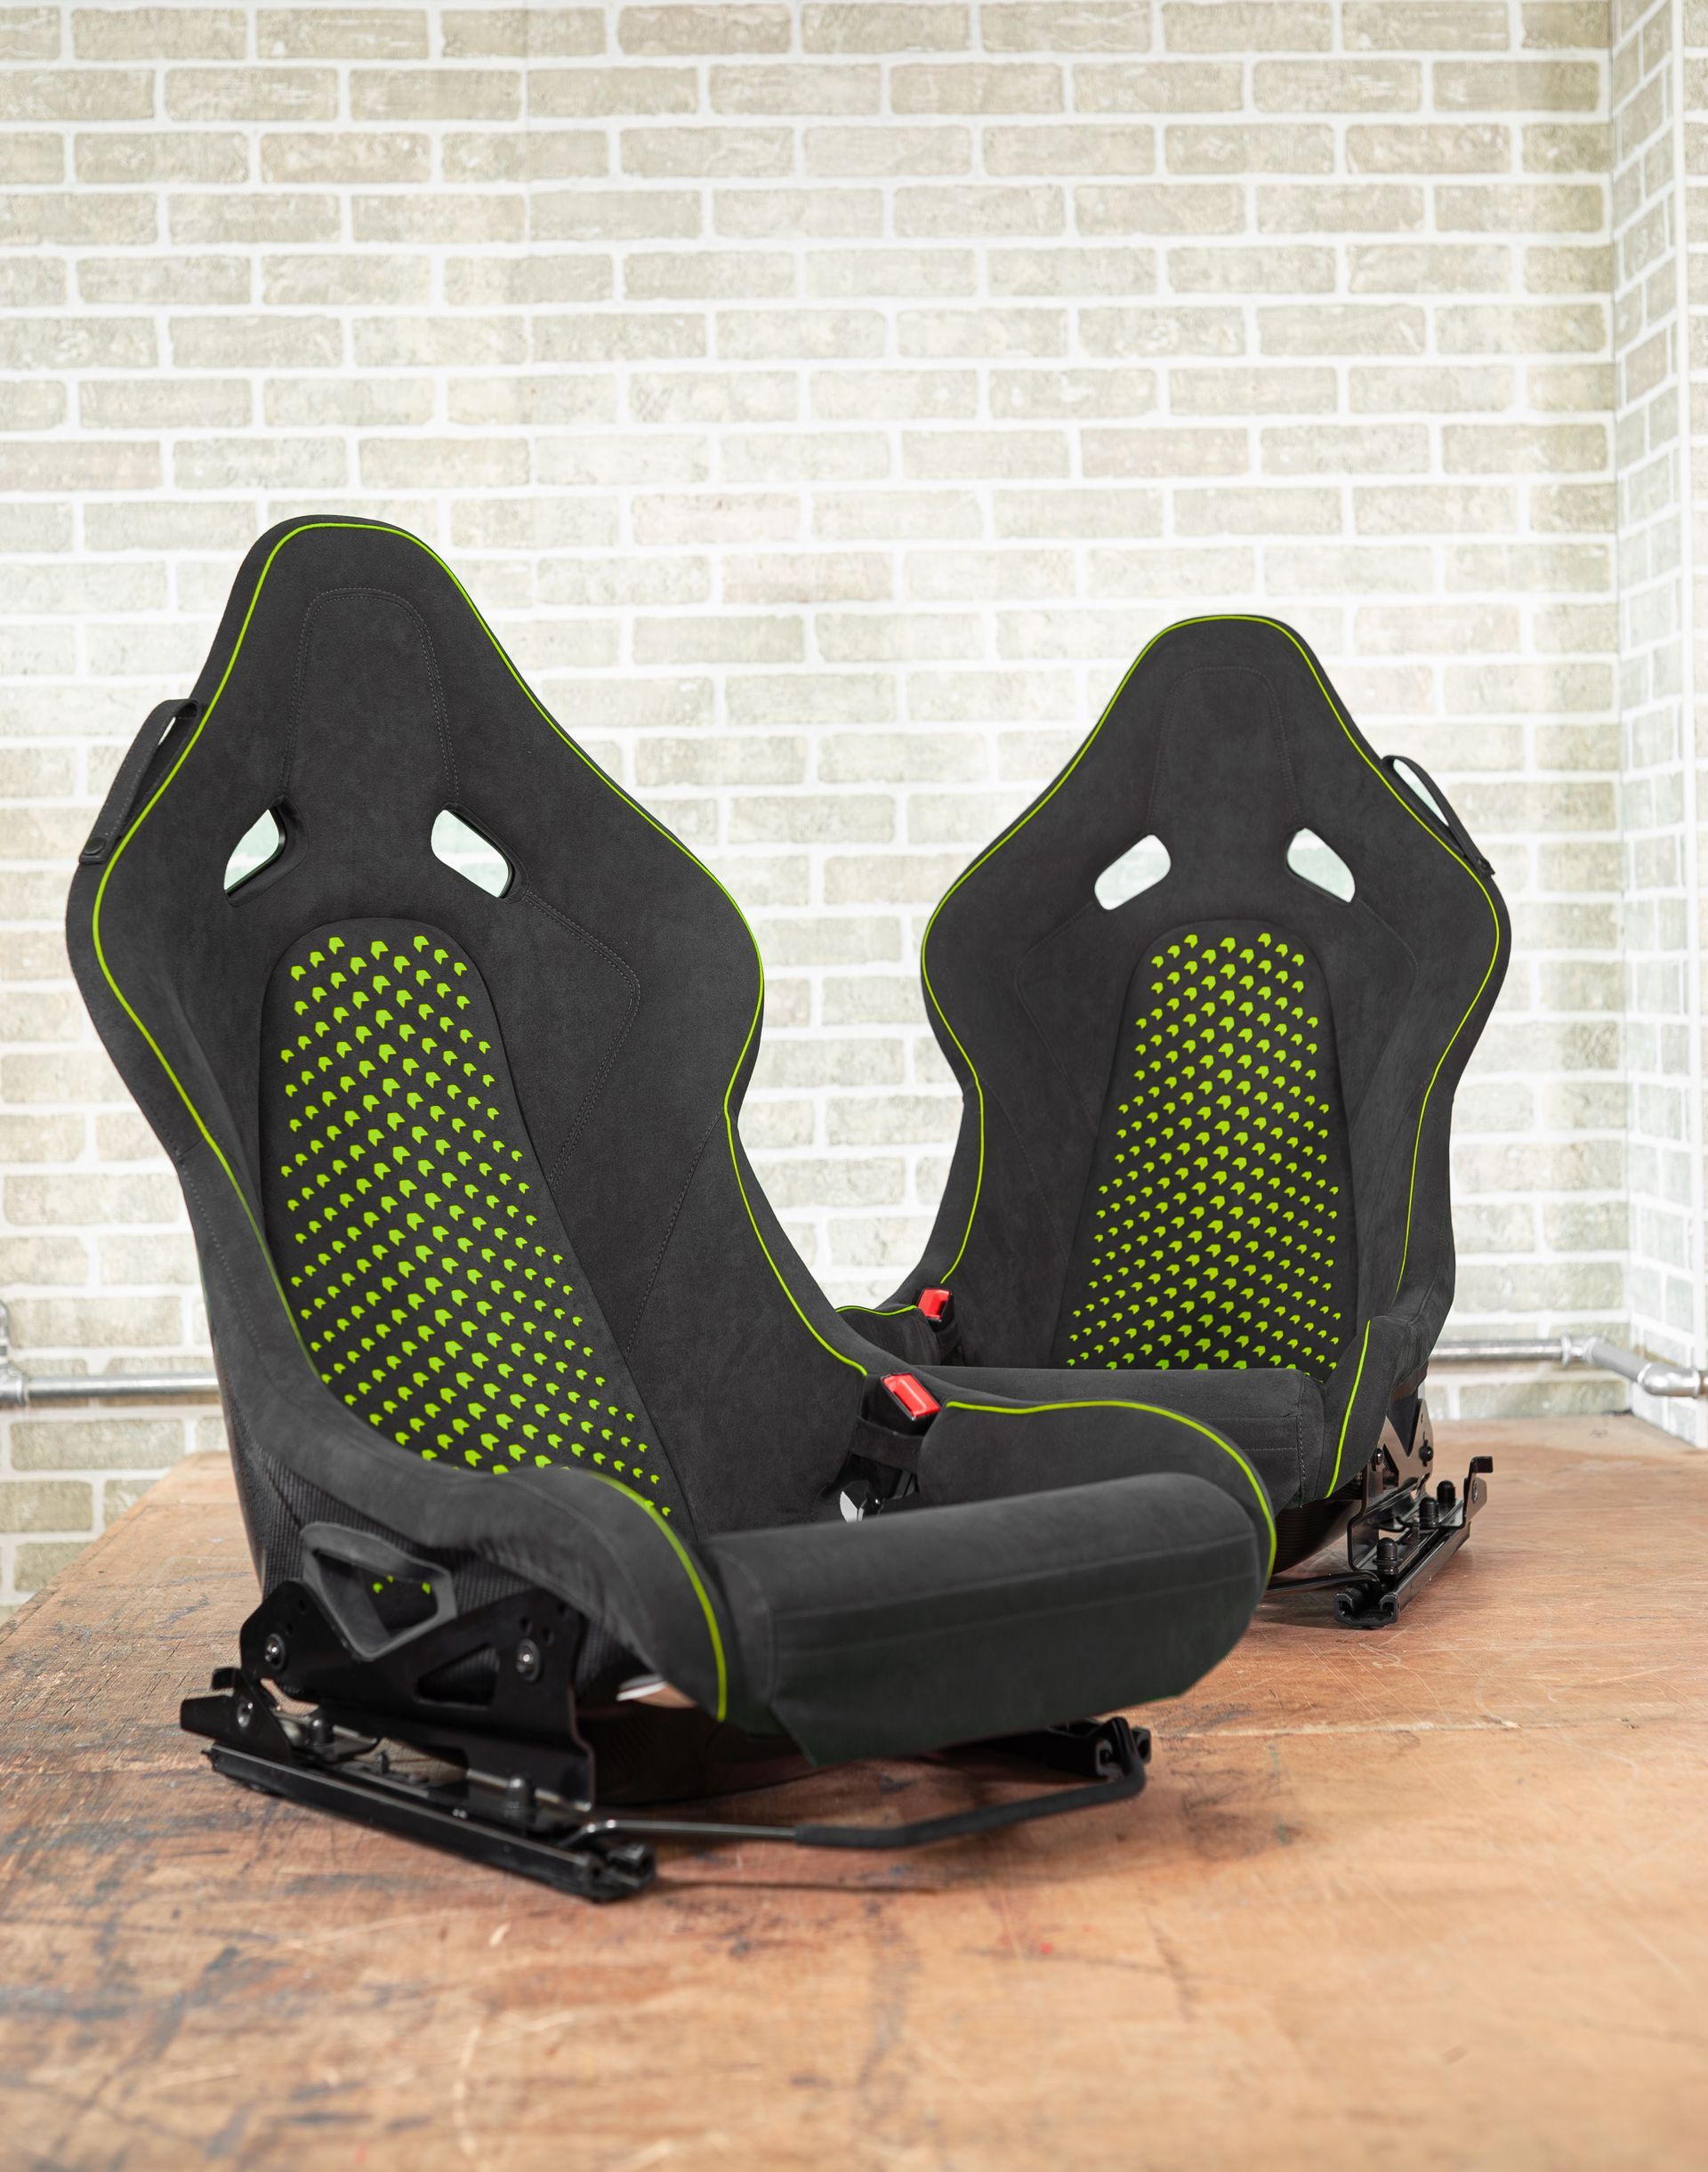 green black alcantara seats mclaren p1 style 600lt 720s 765lt 750s retrim upholstery recover petfred